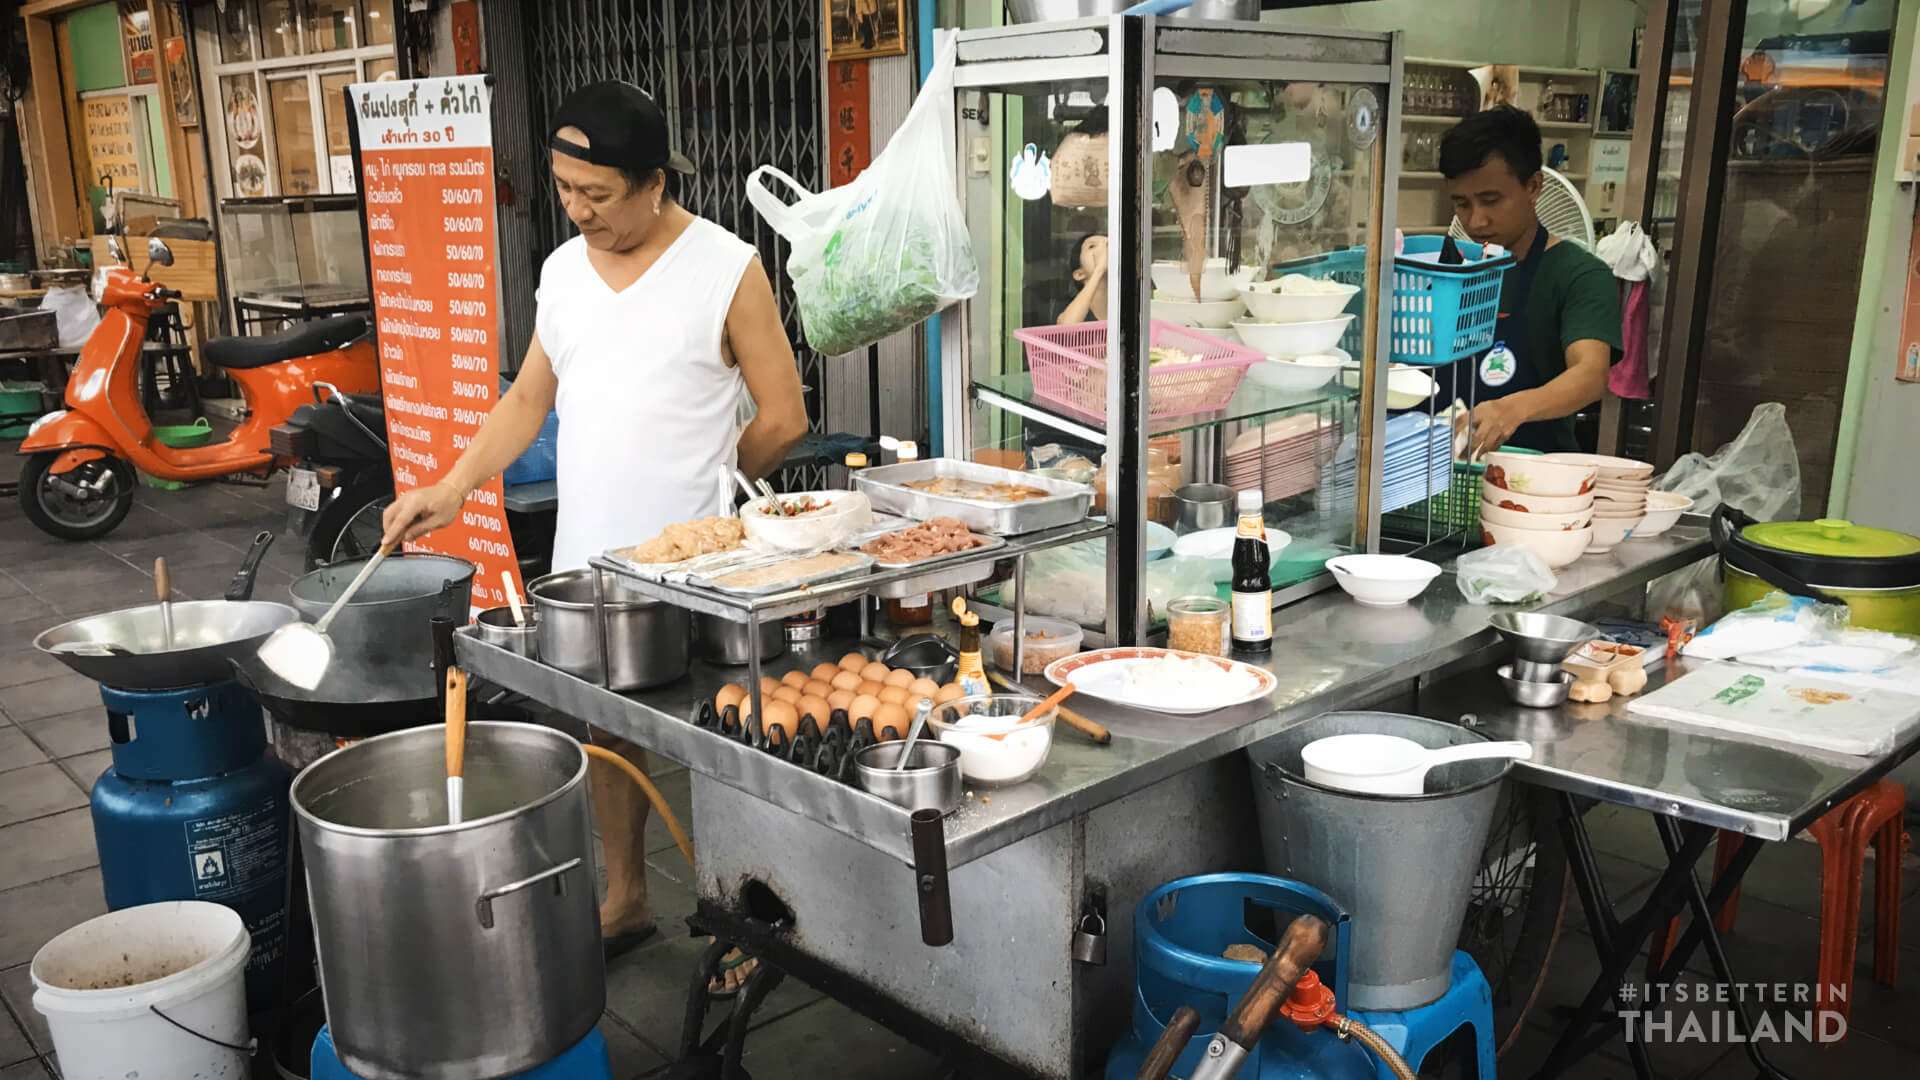 Stir fried street food in Thailand